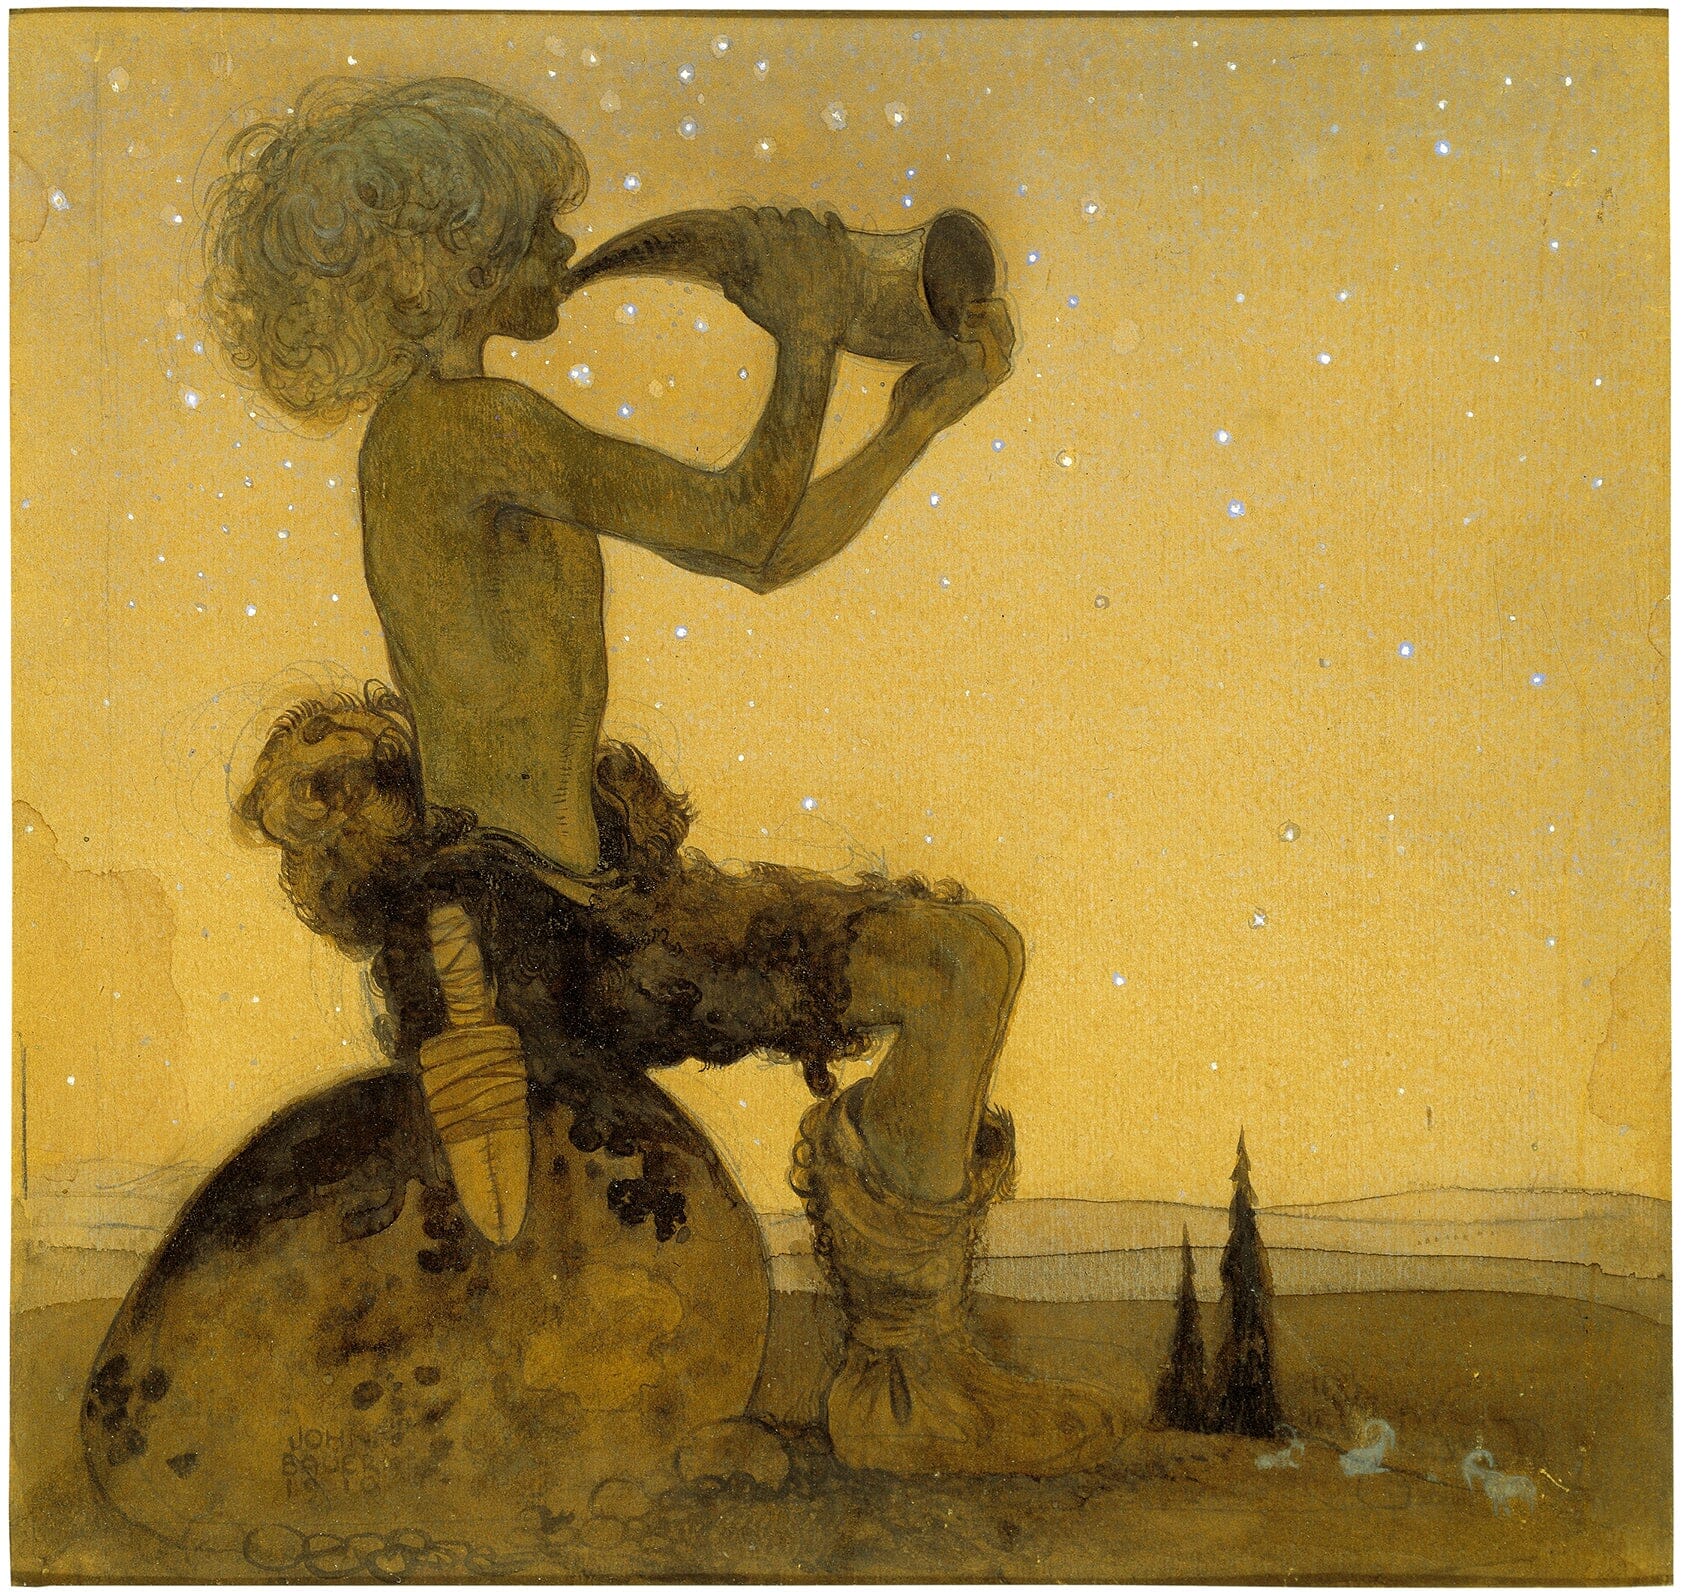 The Fairy Shepherd (1910) | Fairy bedroom decor | John Bauer Posters, Prints, & Visual Artwork The Trumpet Shop   